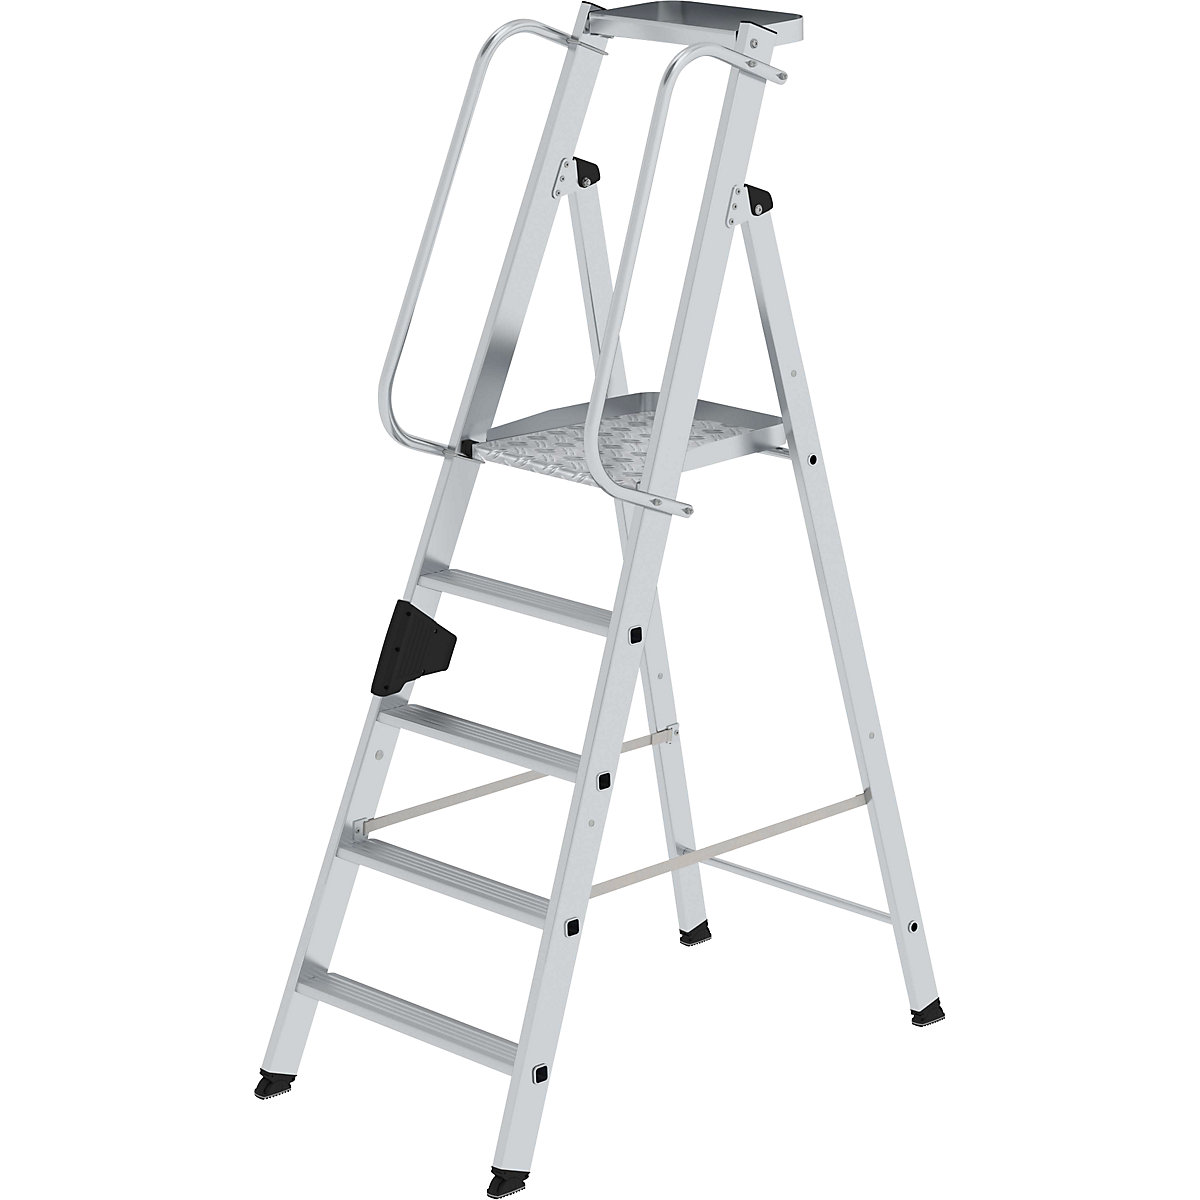 Aluminium step ladder with large platform – MUNK, hand rail on both sides, 5 steps inclusive platforms